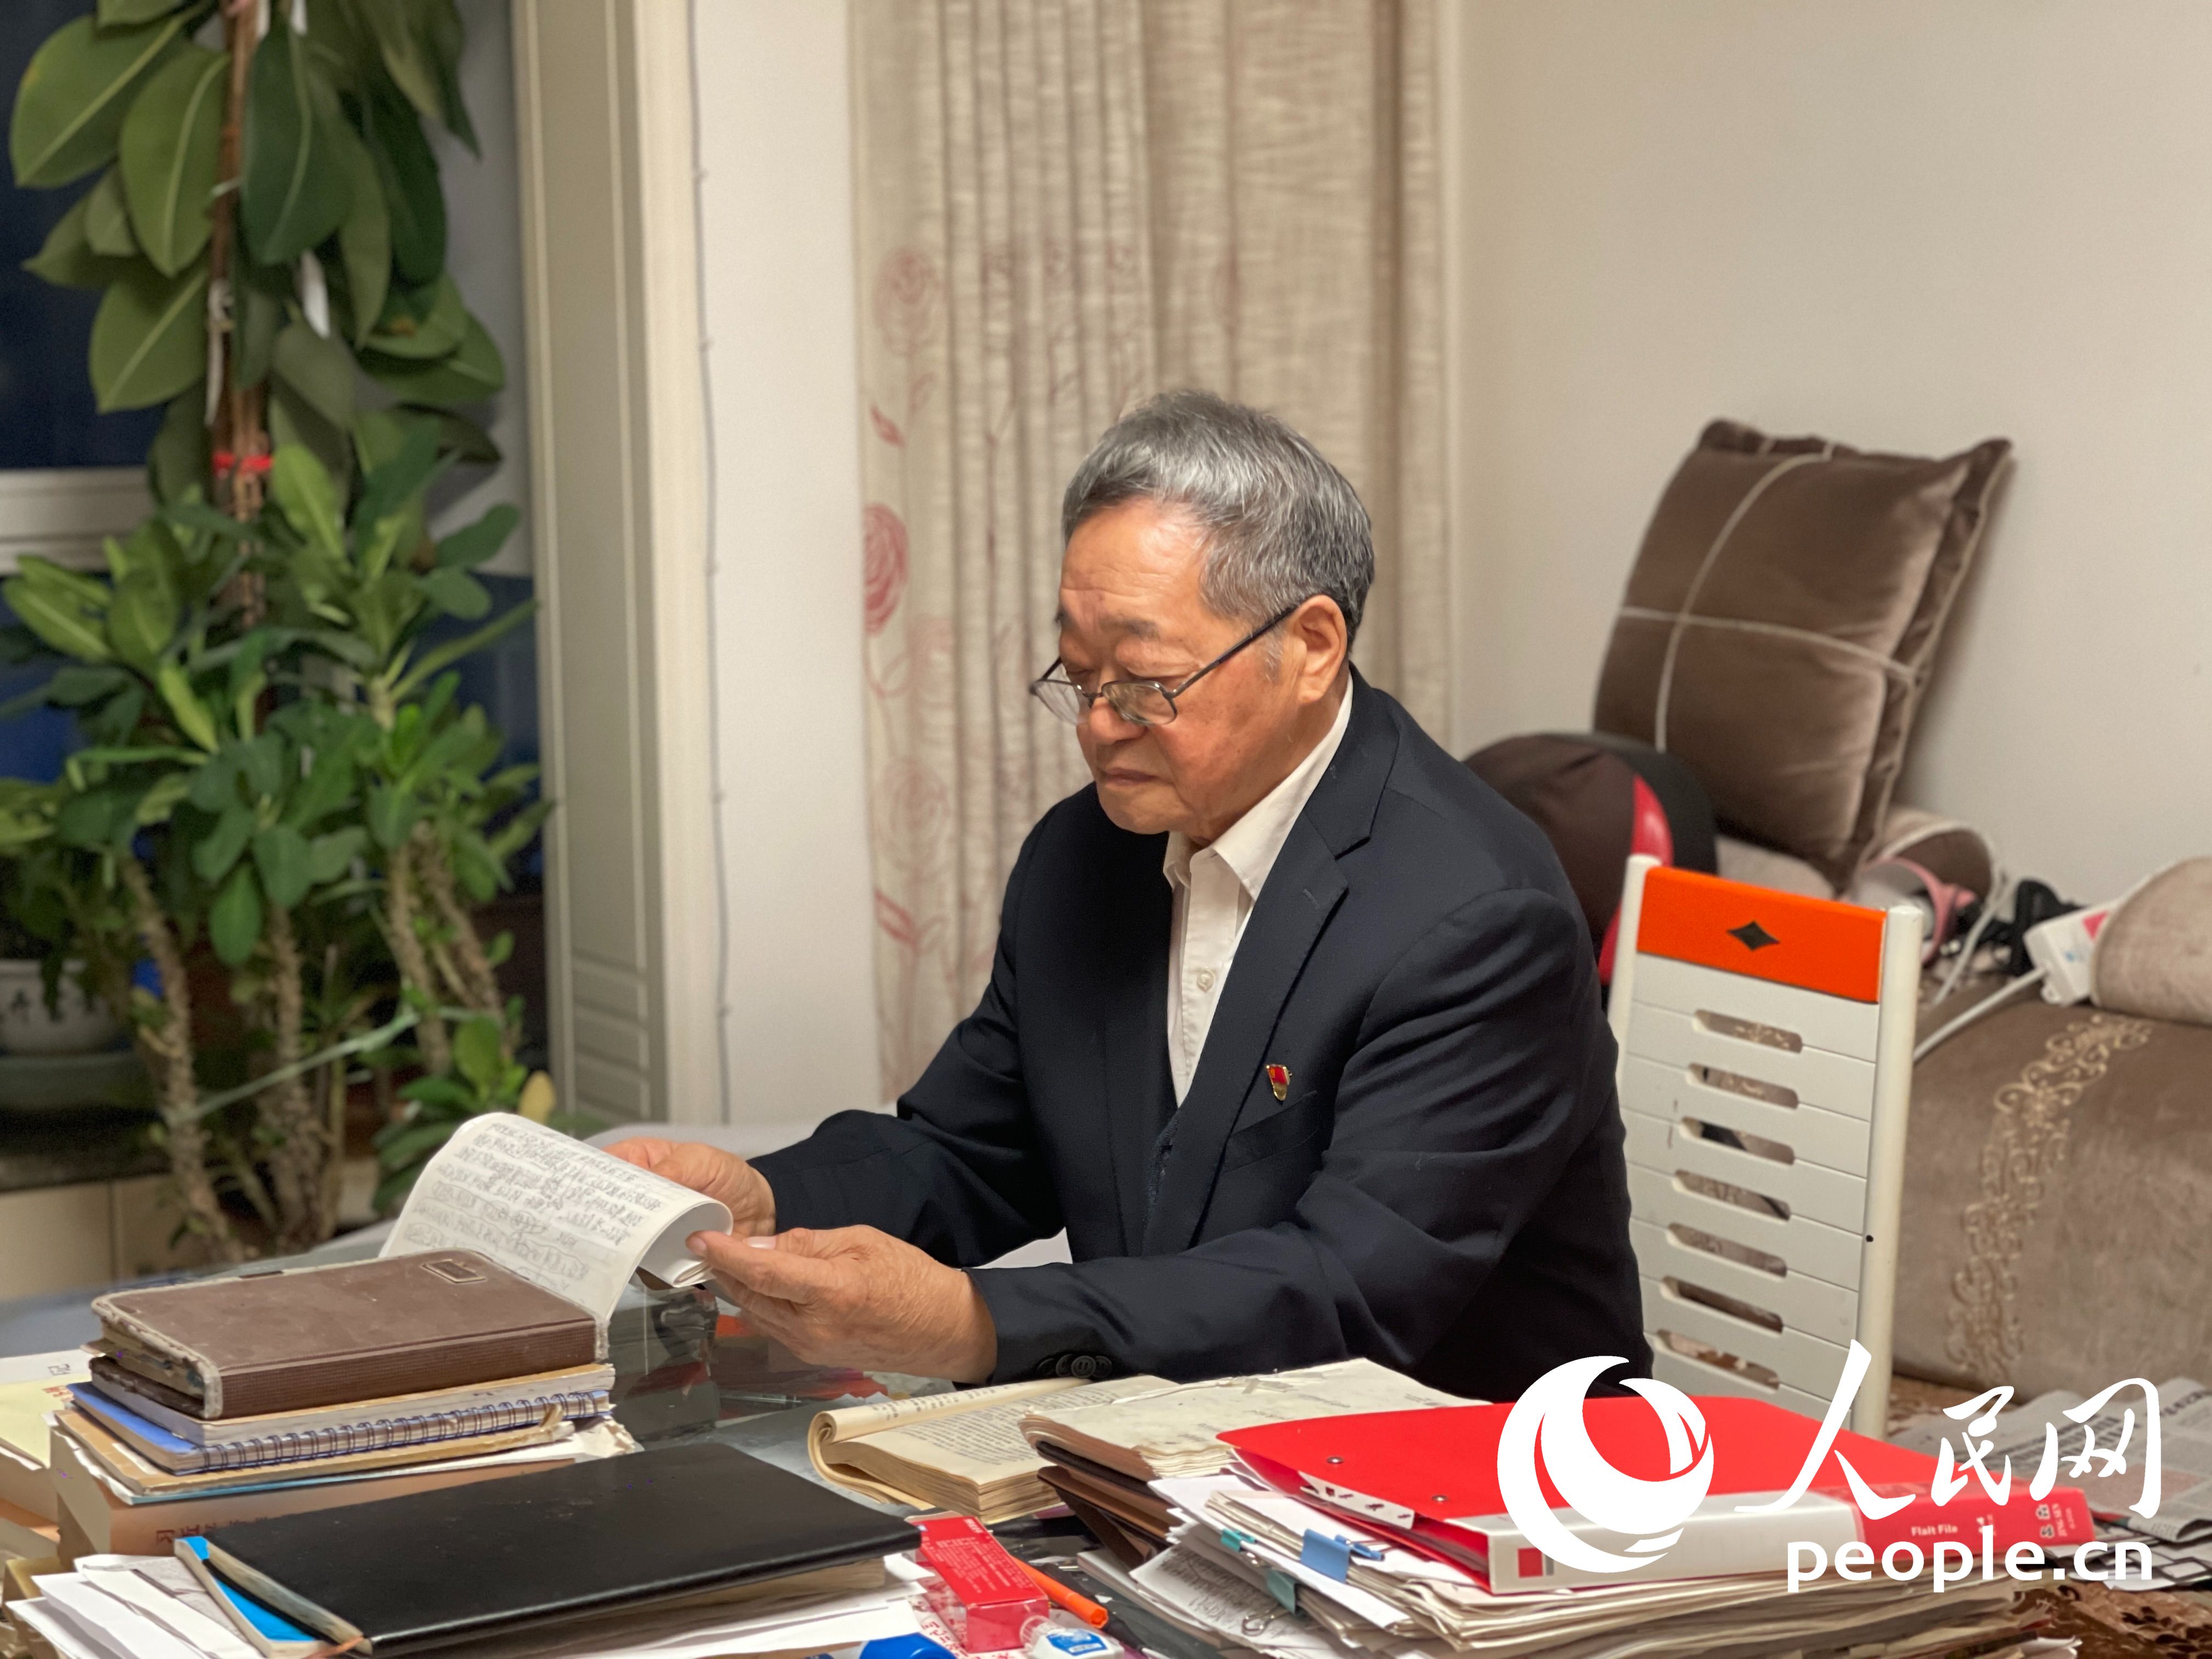  Xu Jinshi is reading the propaganda materials. Photographed by Zhou Jingyuan on People's Daily Online